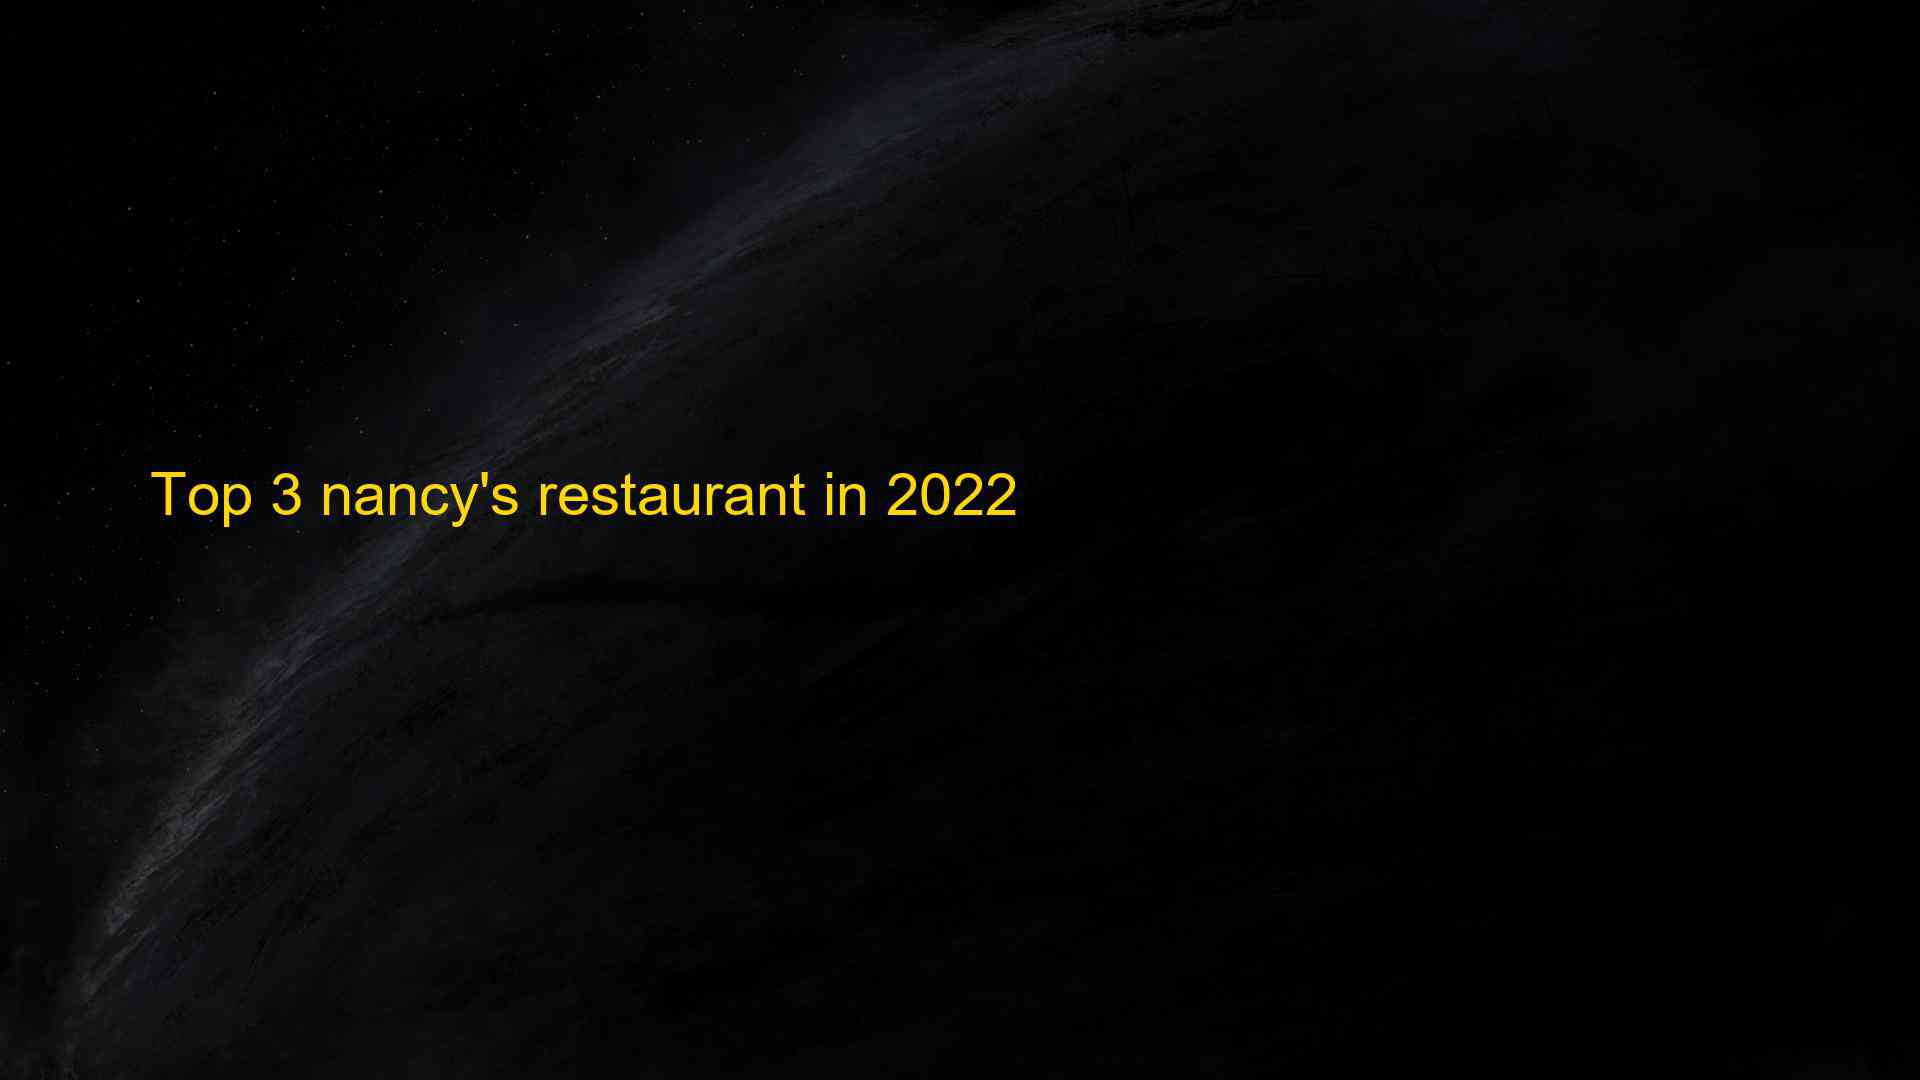 Top 3 nancys restaurant in 2022 1663175777